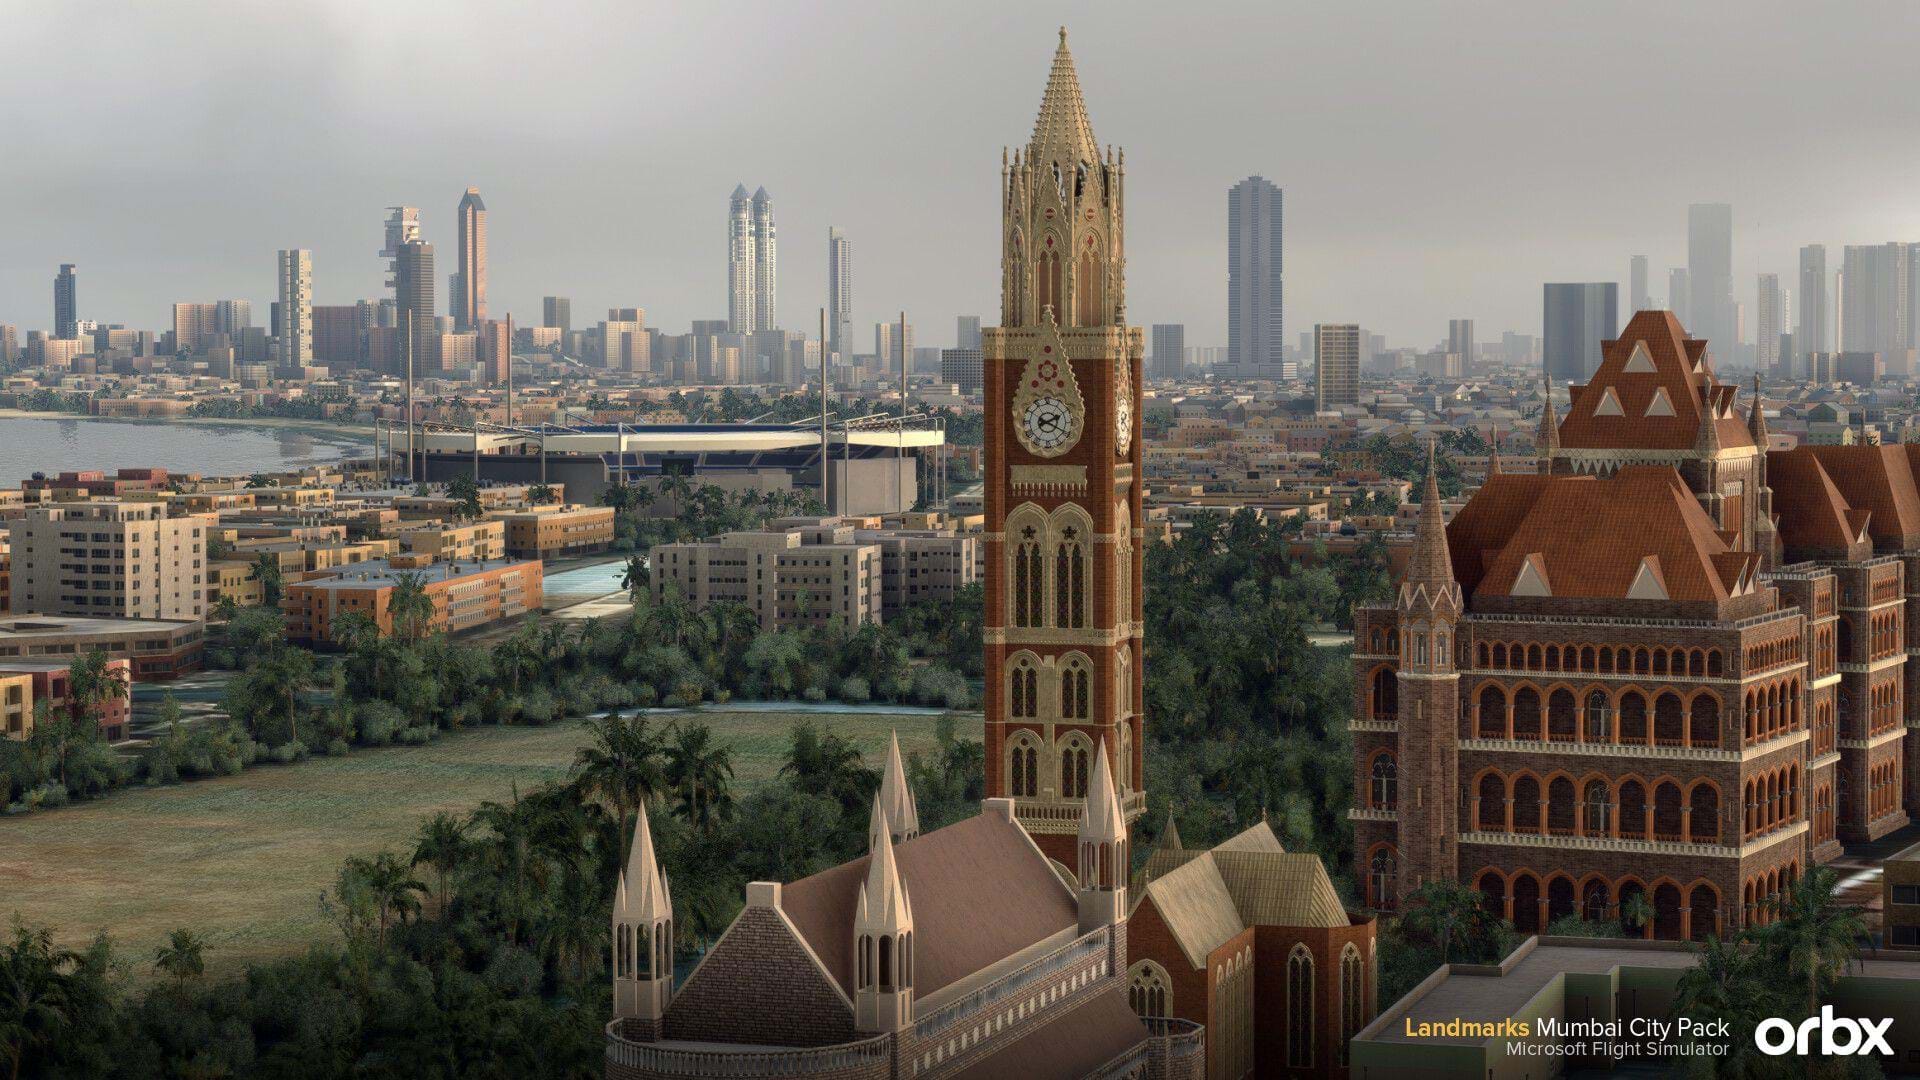 Orbx Landmarks Mumbai City Pack for Microsoft Flight Simulator